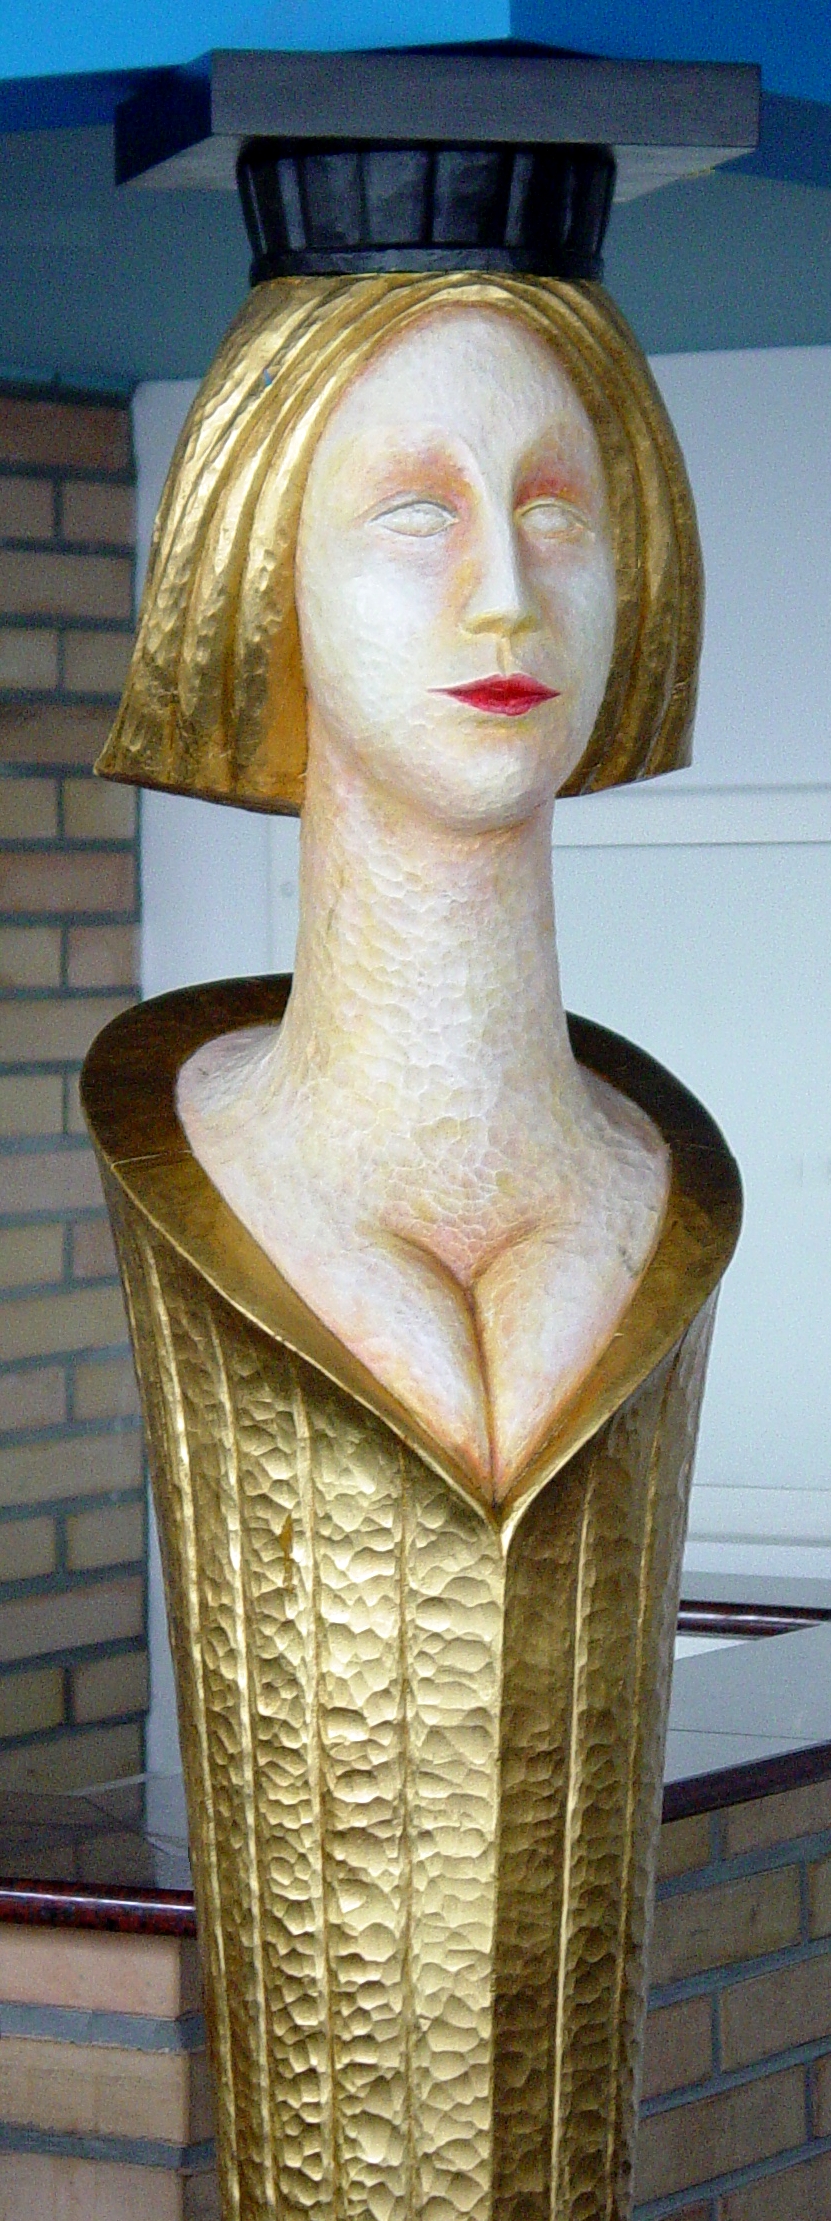 Art museum statue of woman